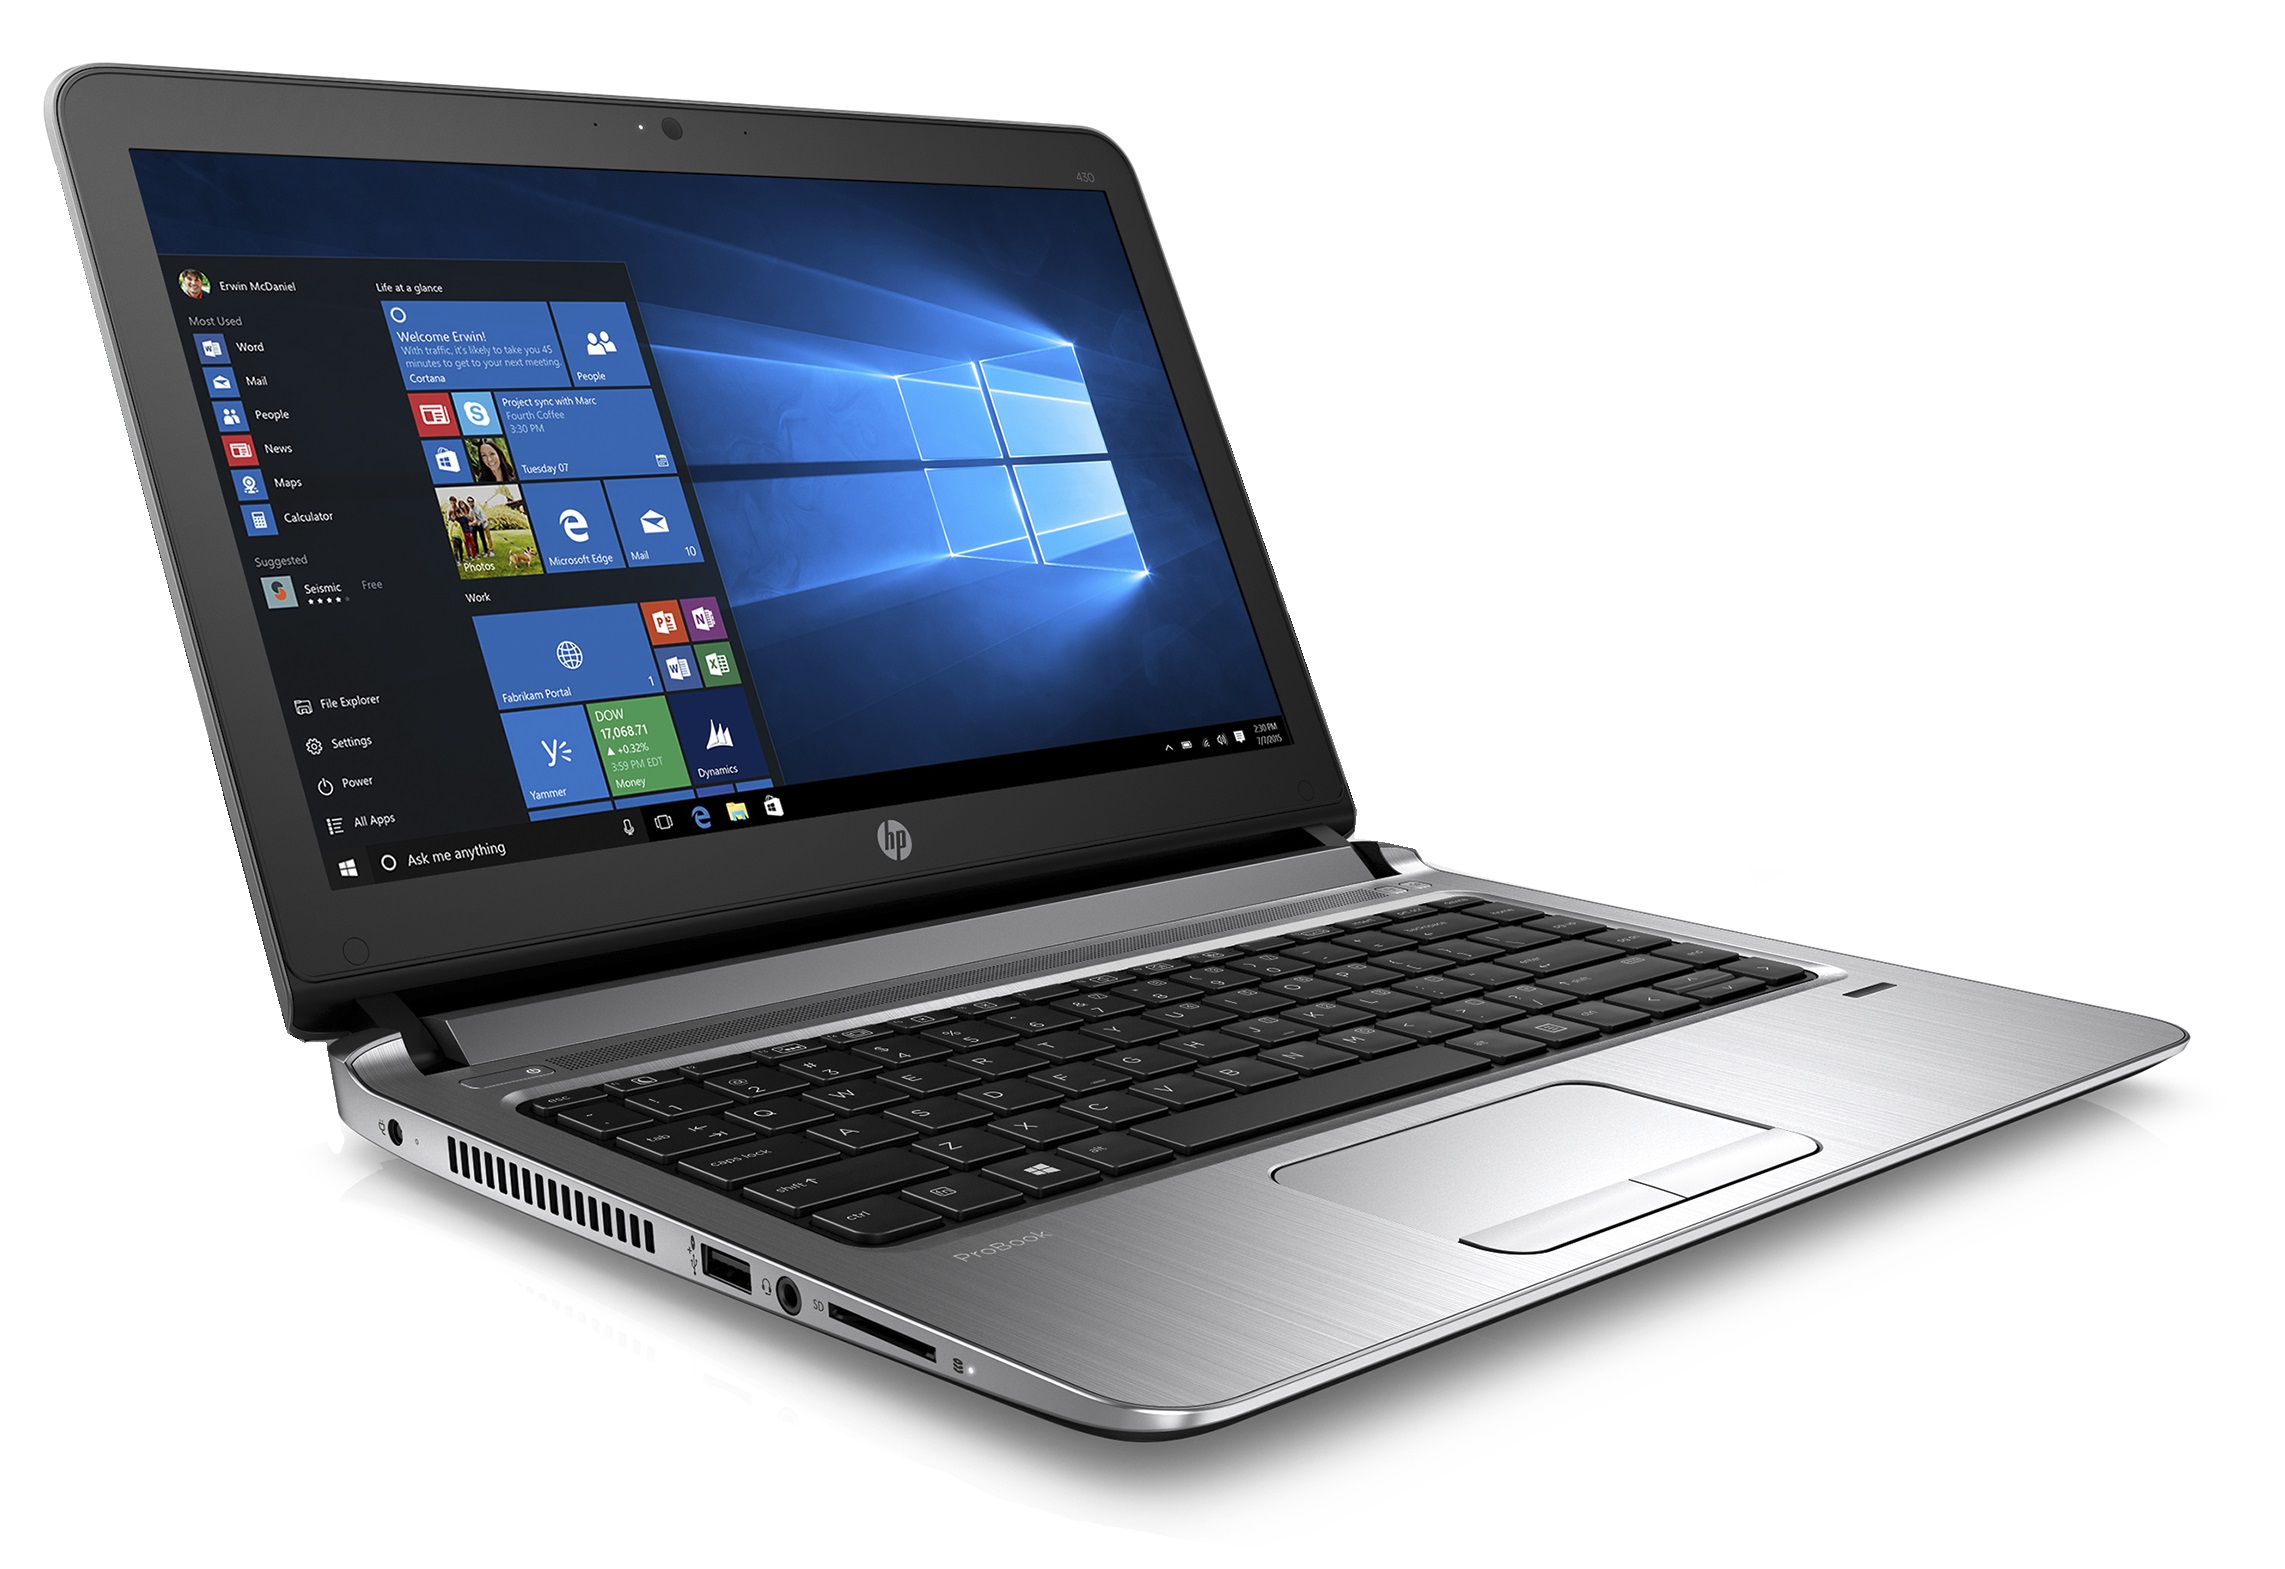 Hp Probook 440 G3 Laptop Intel Core I3 230 Ghz 8gb Ram 128gb Ssd Windows 10 Pro 30799 Picclick 4178